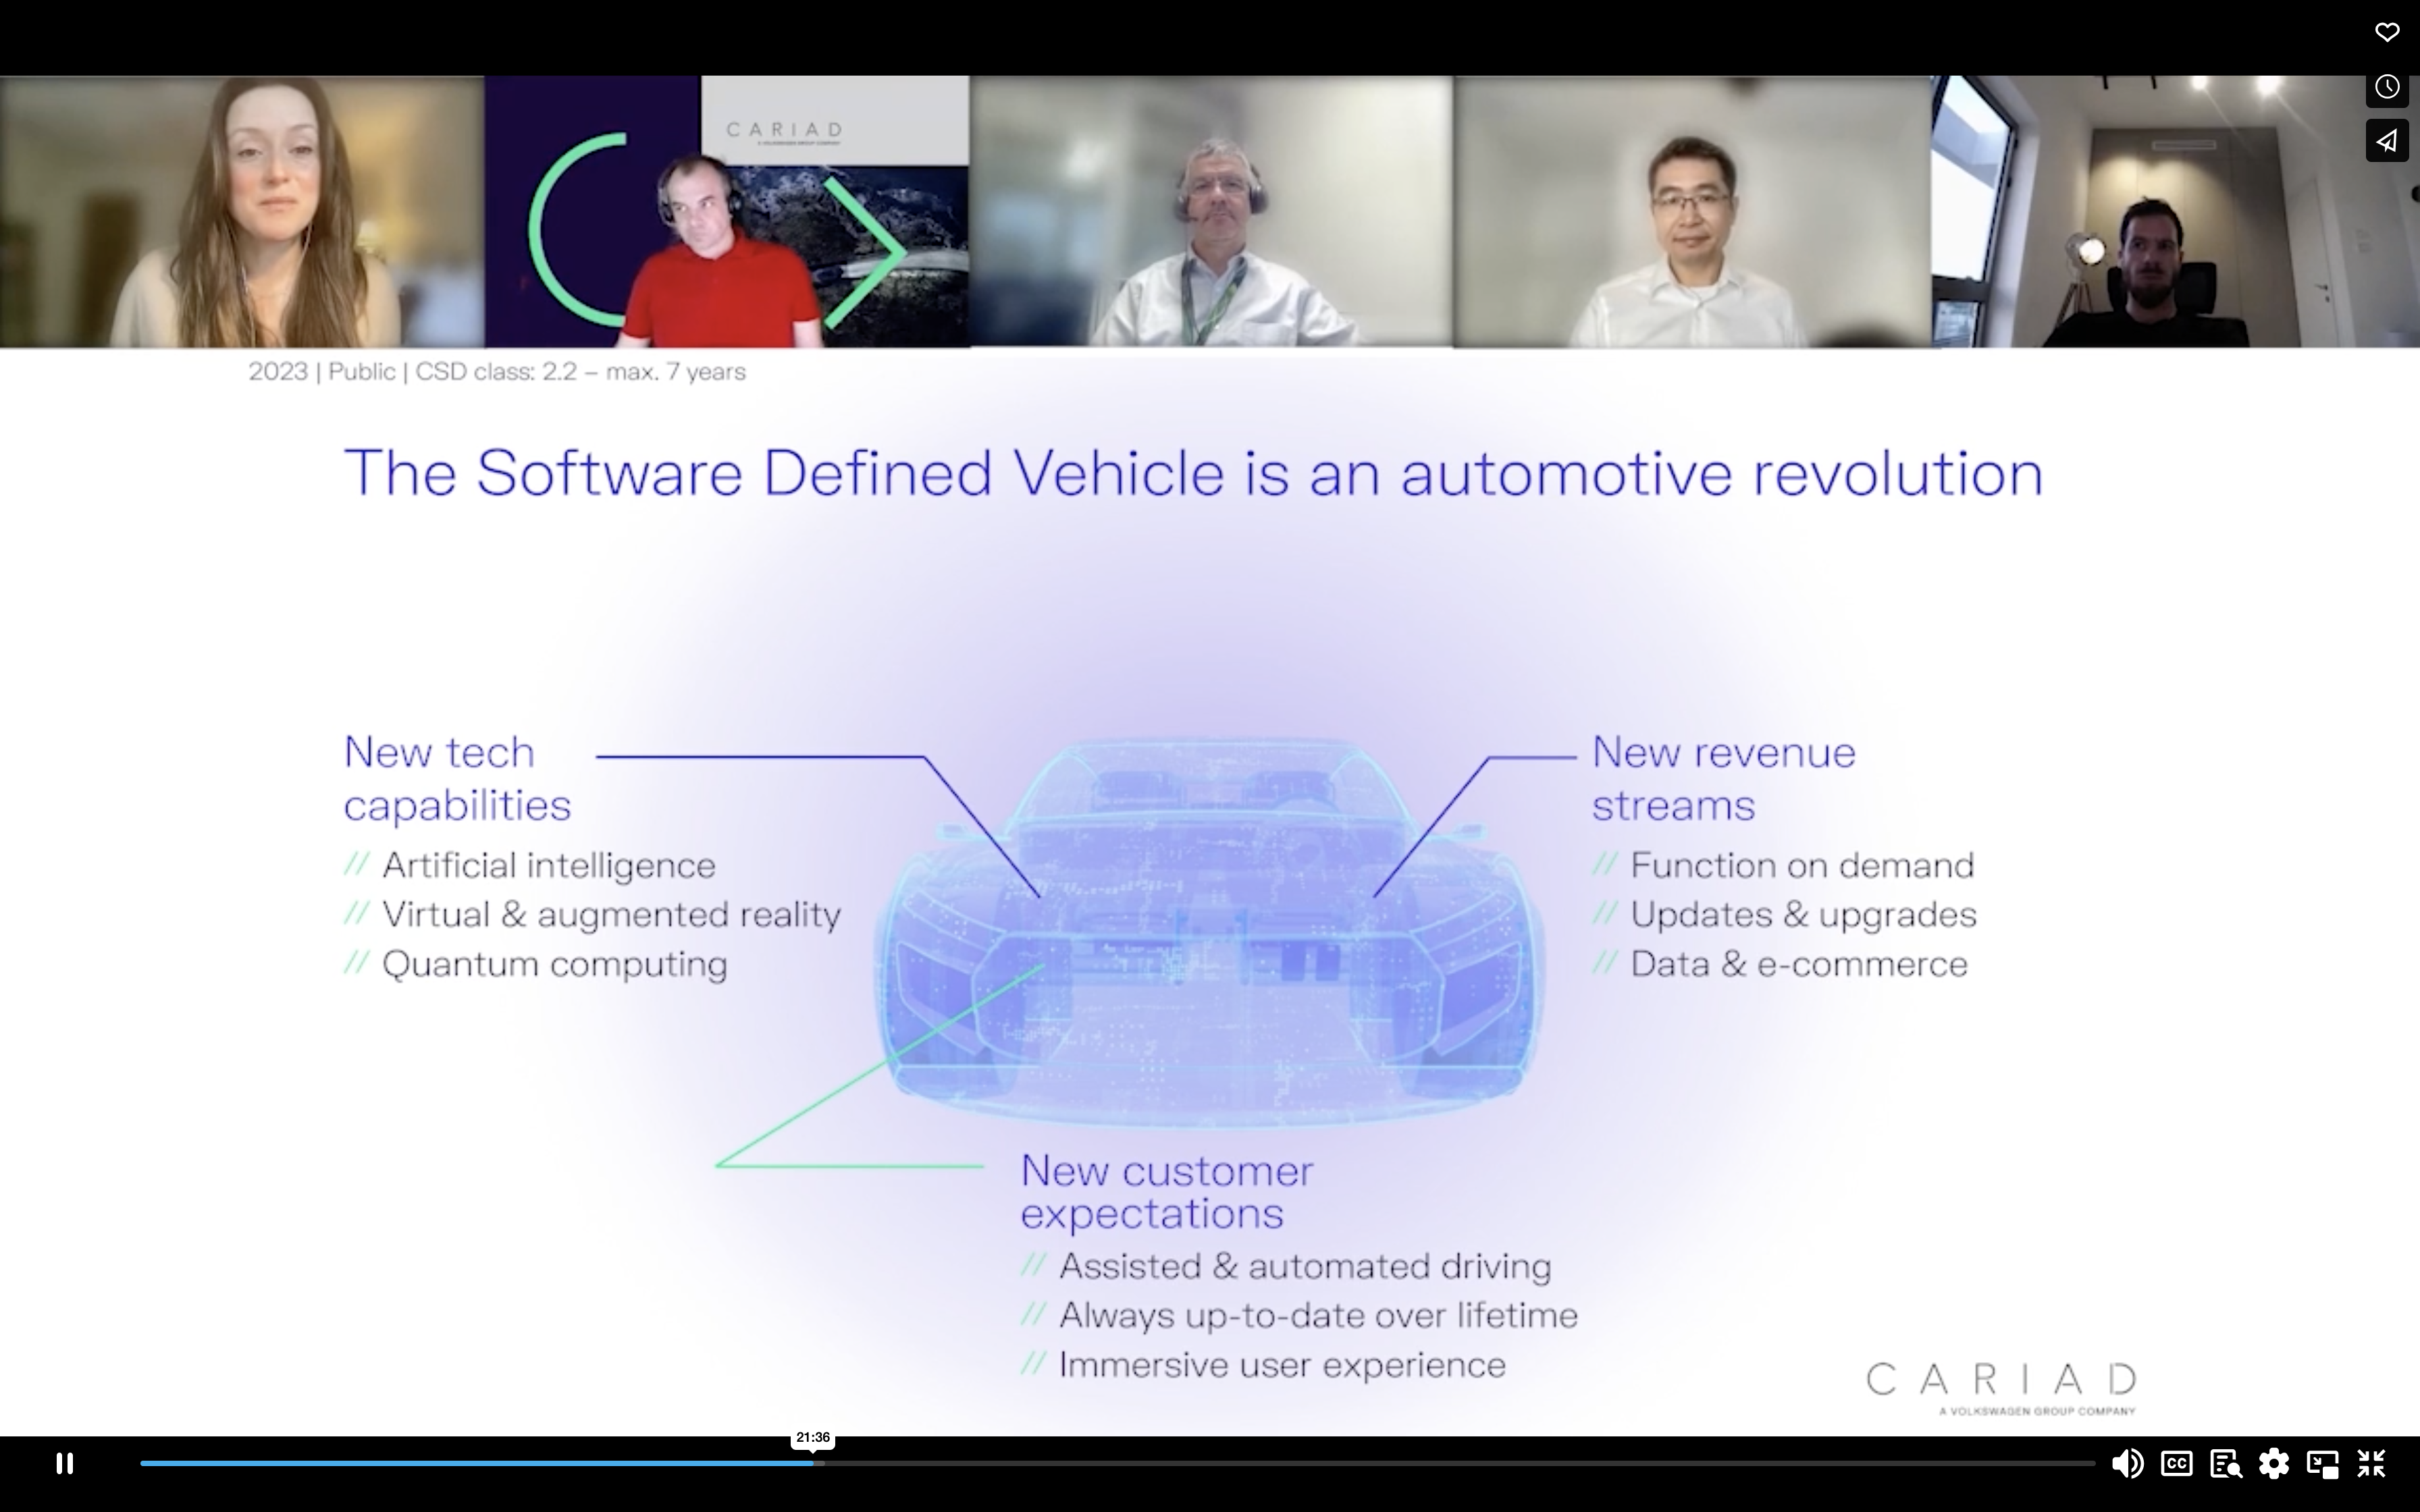 SDV is an Automotive Revolution